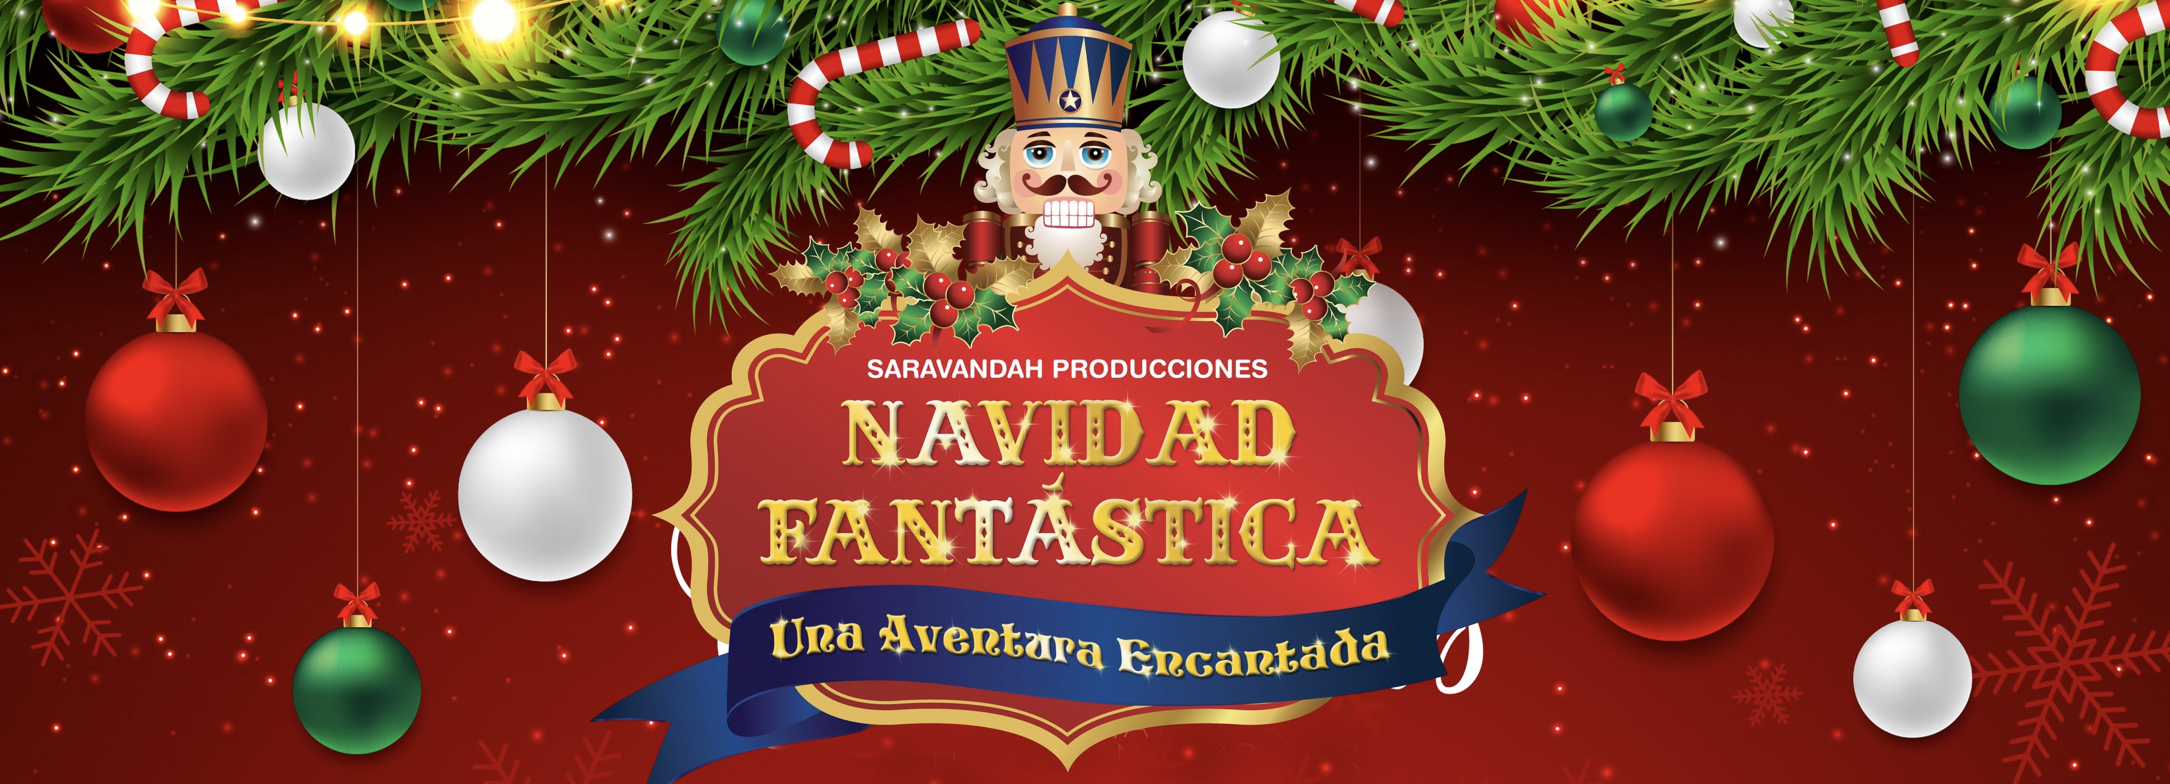 Show Navidad Fantástica